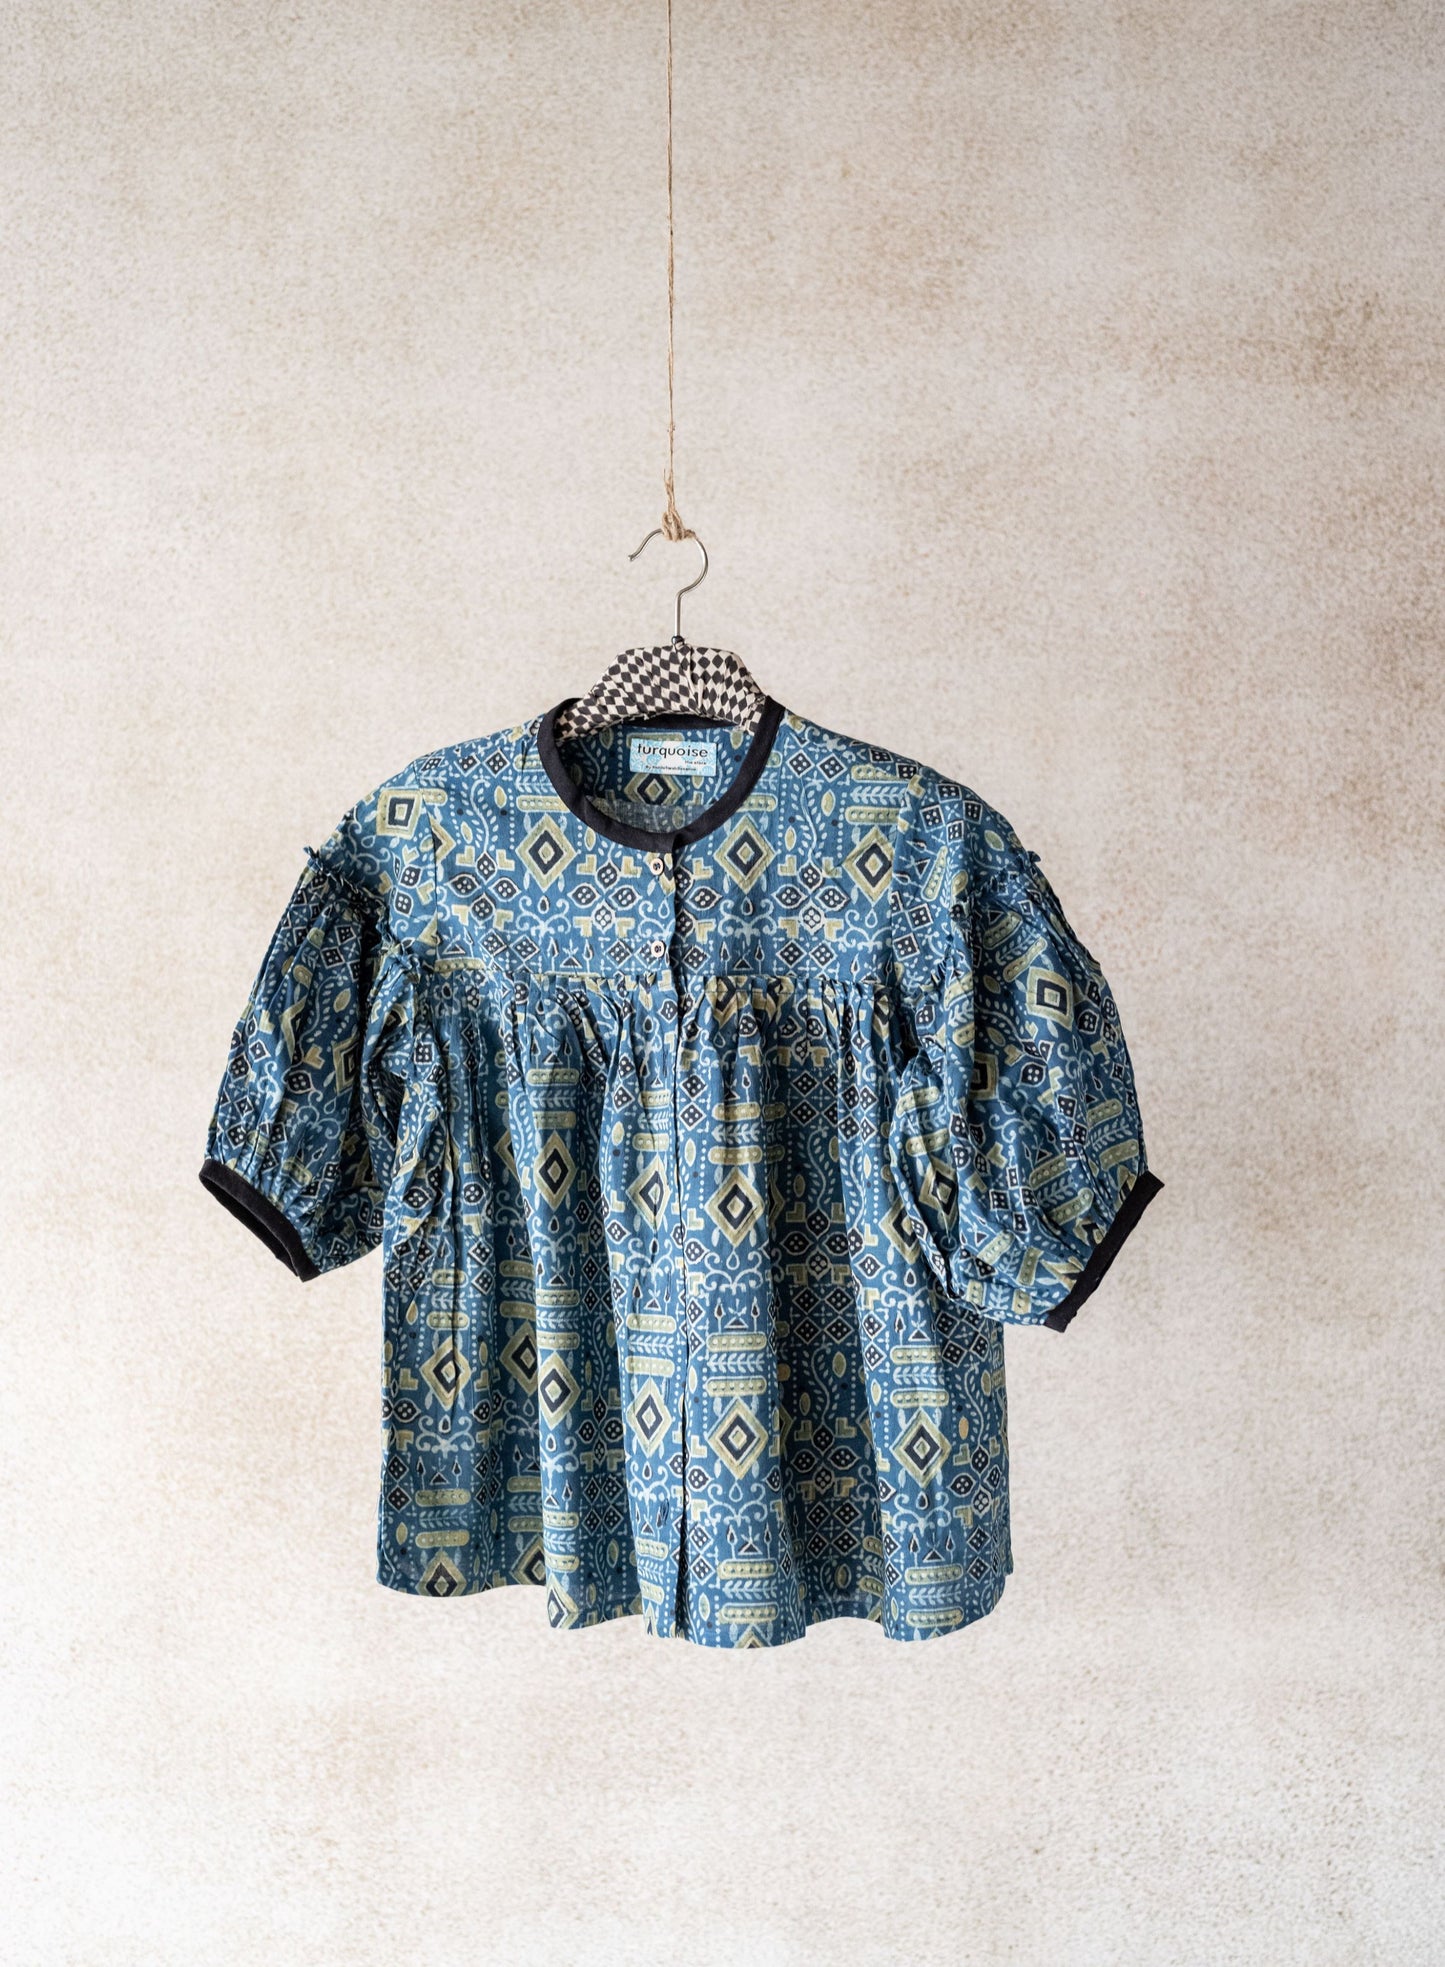 Indigo ajrakh puffed sleeves shirt, Handmade indigo shirt, Indigo women's shirt in cotton